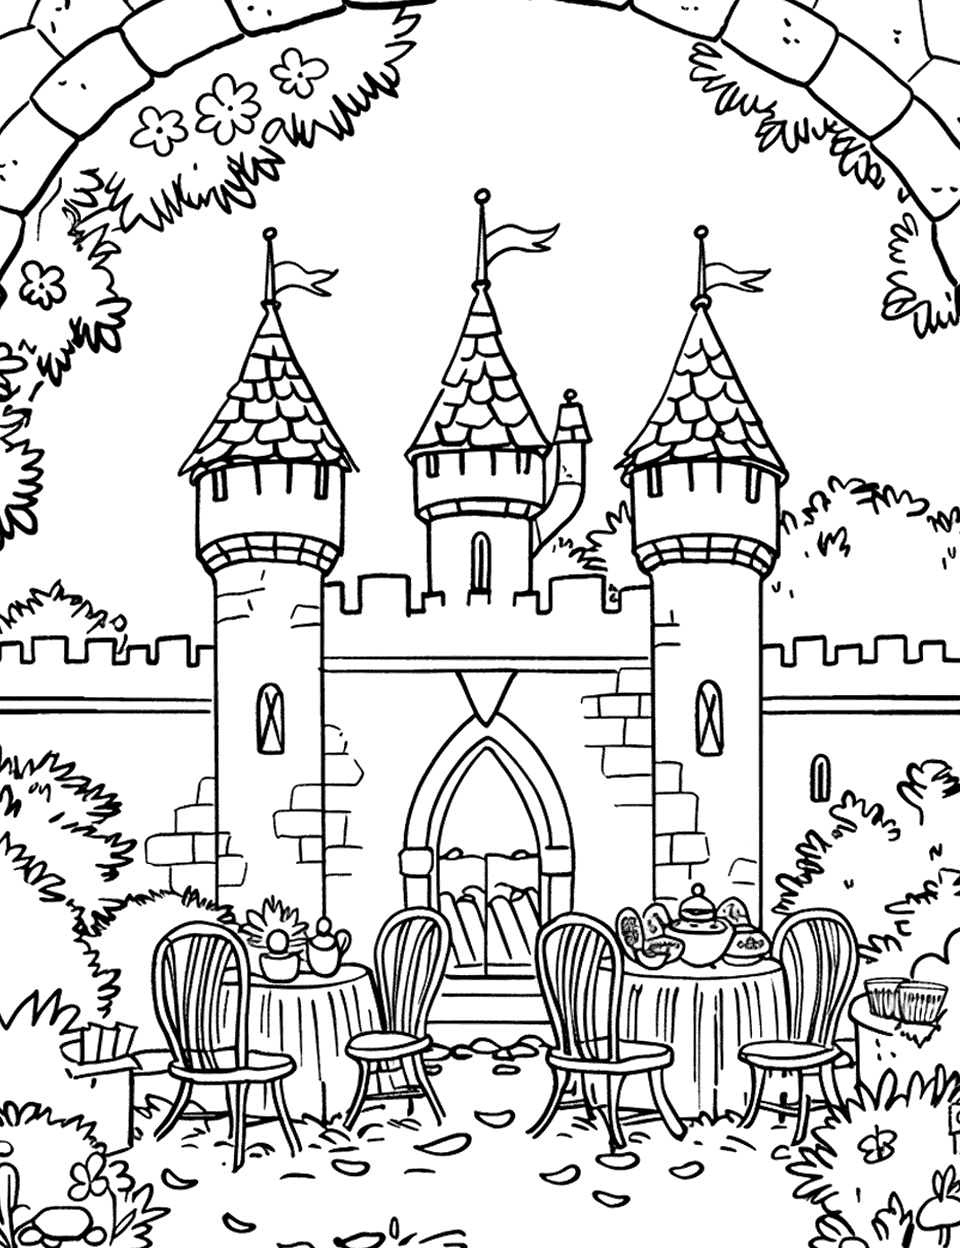 Castle Garden Tea Party Coloring Page - A cute scene of a tea party in the castle’s lush gardens.